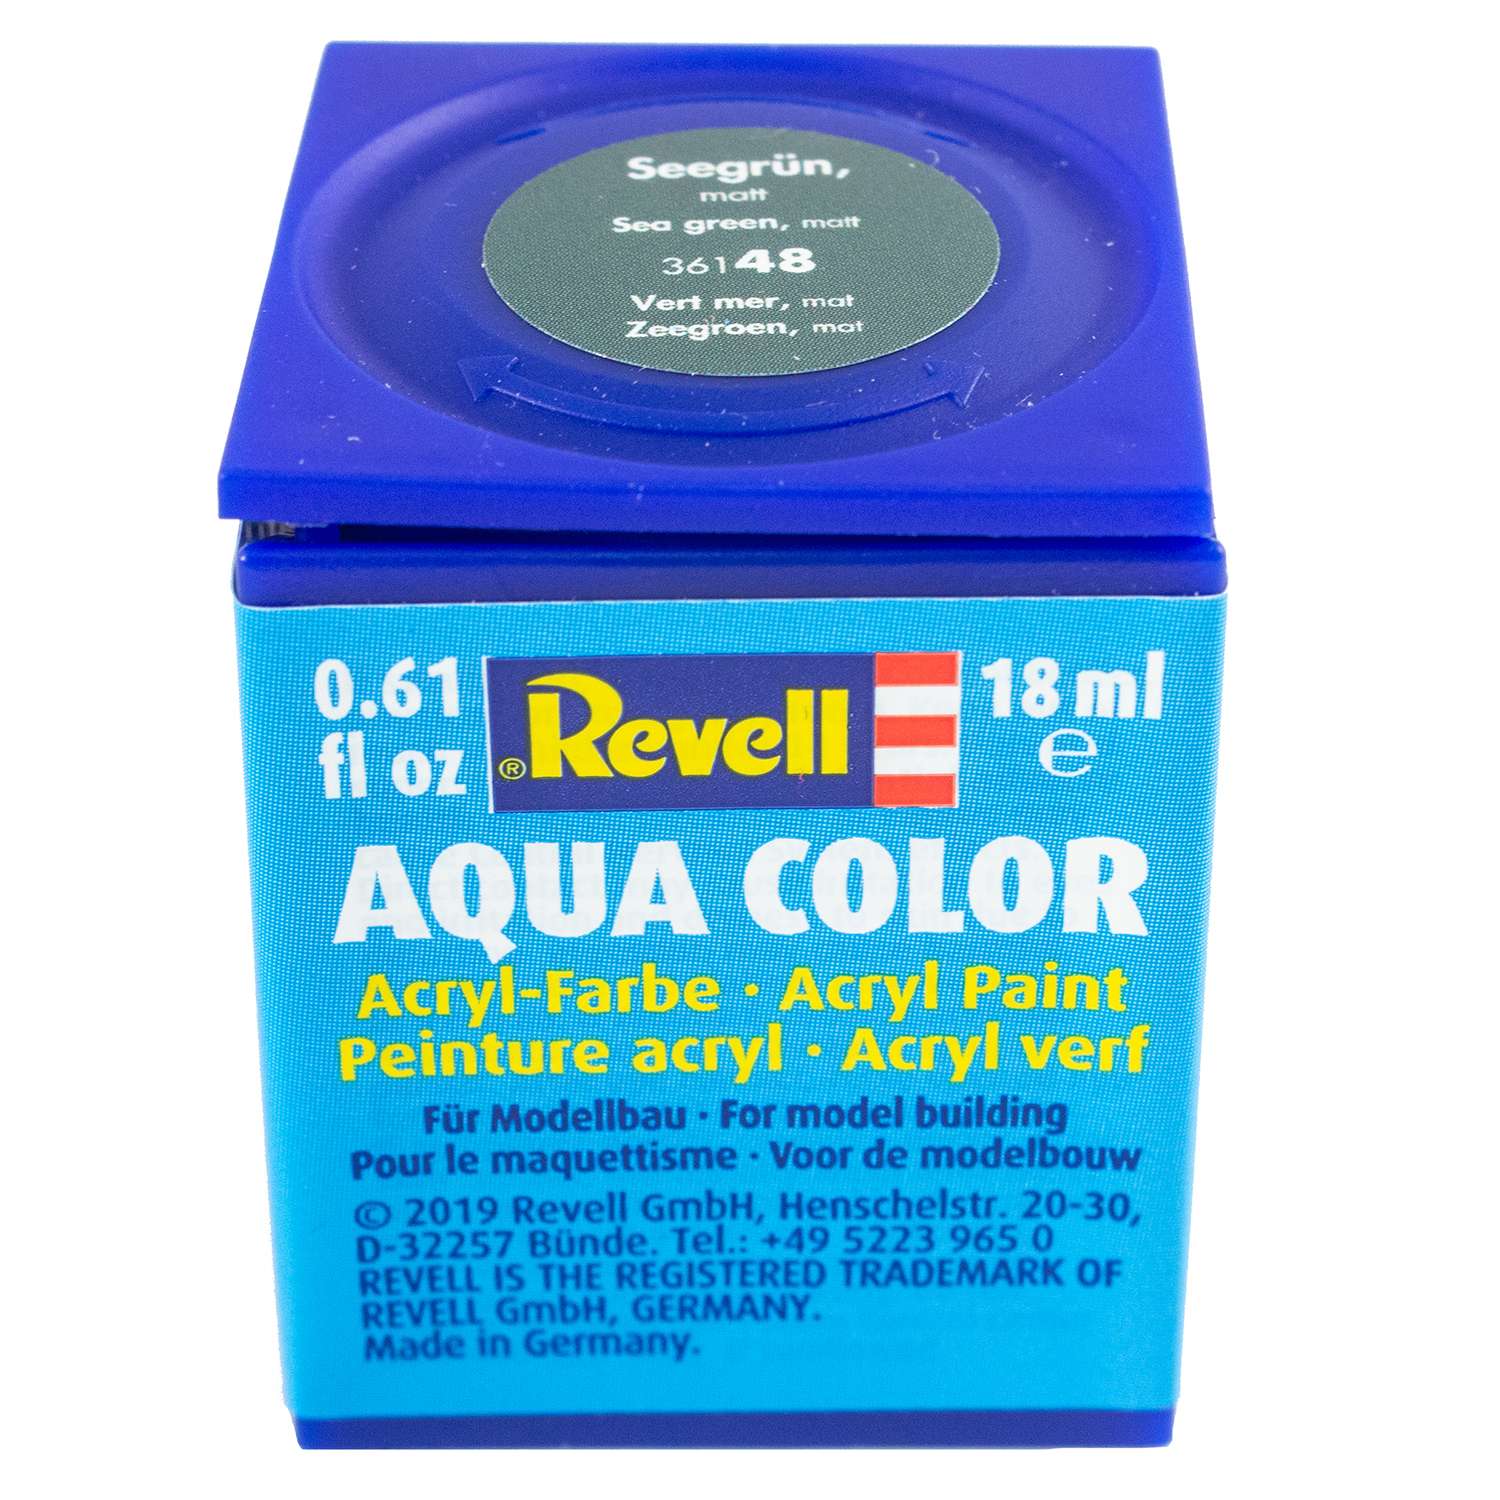 Аква-краска Revell цвета морской волны матовая 36148 - фото 1